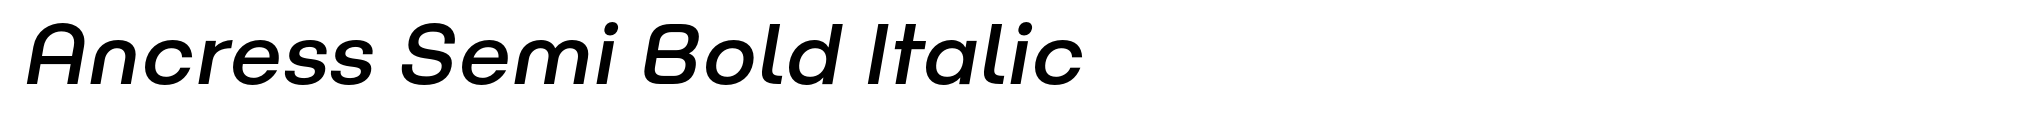 Ancress Semi Bold Italic image